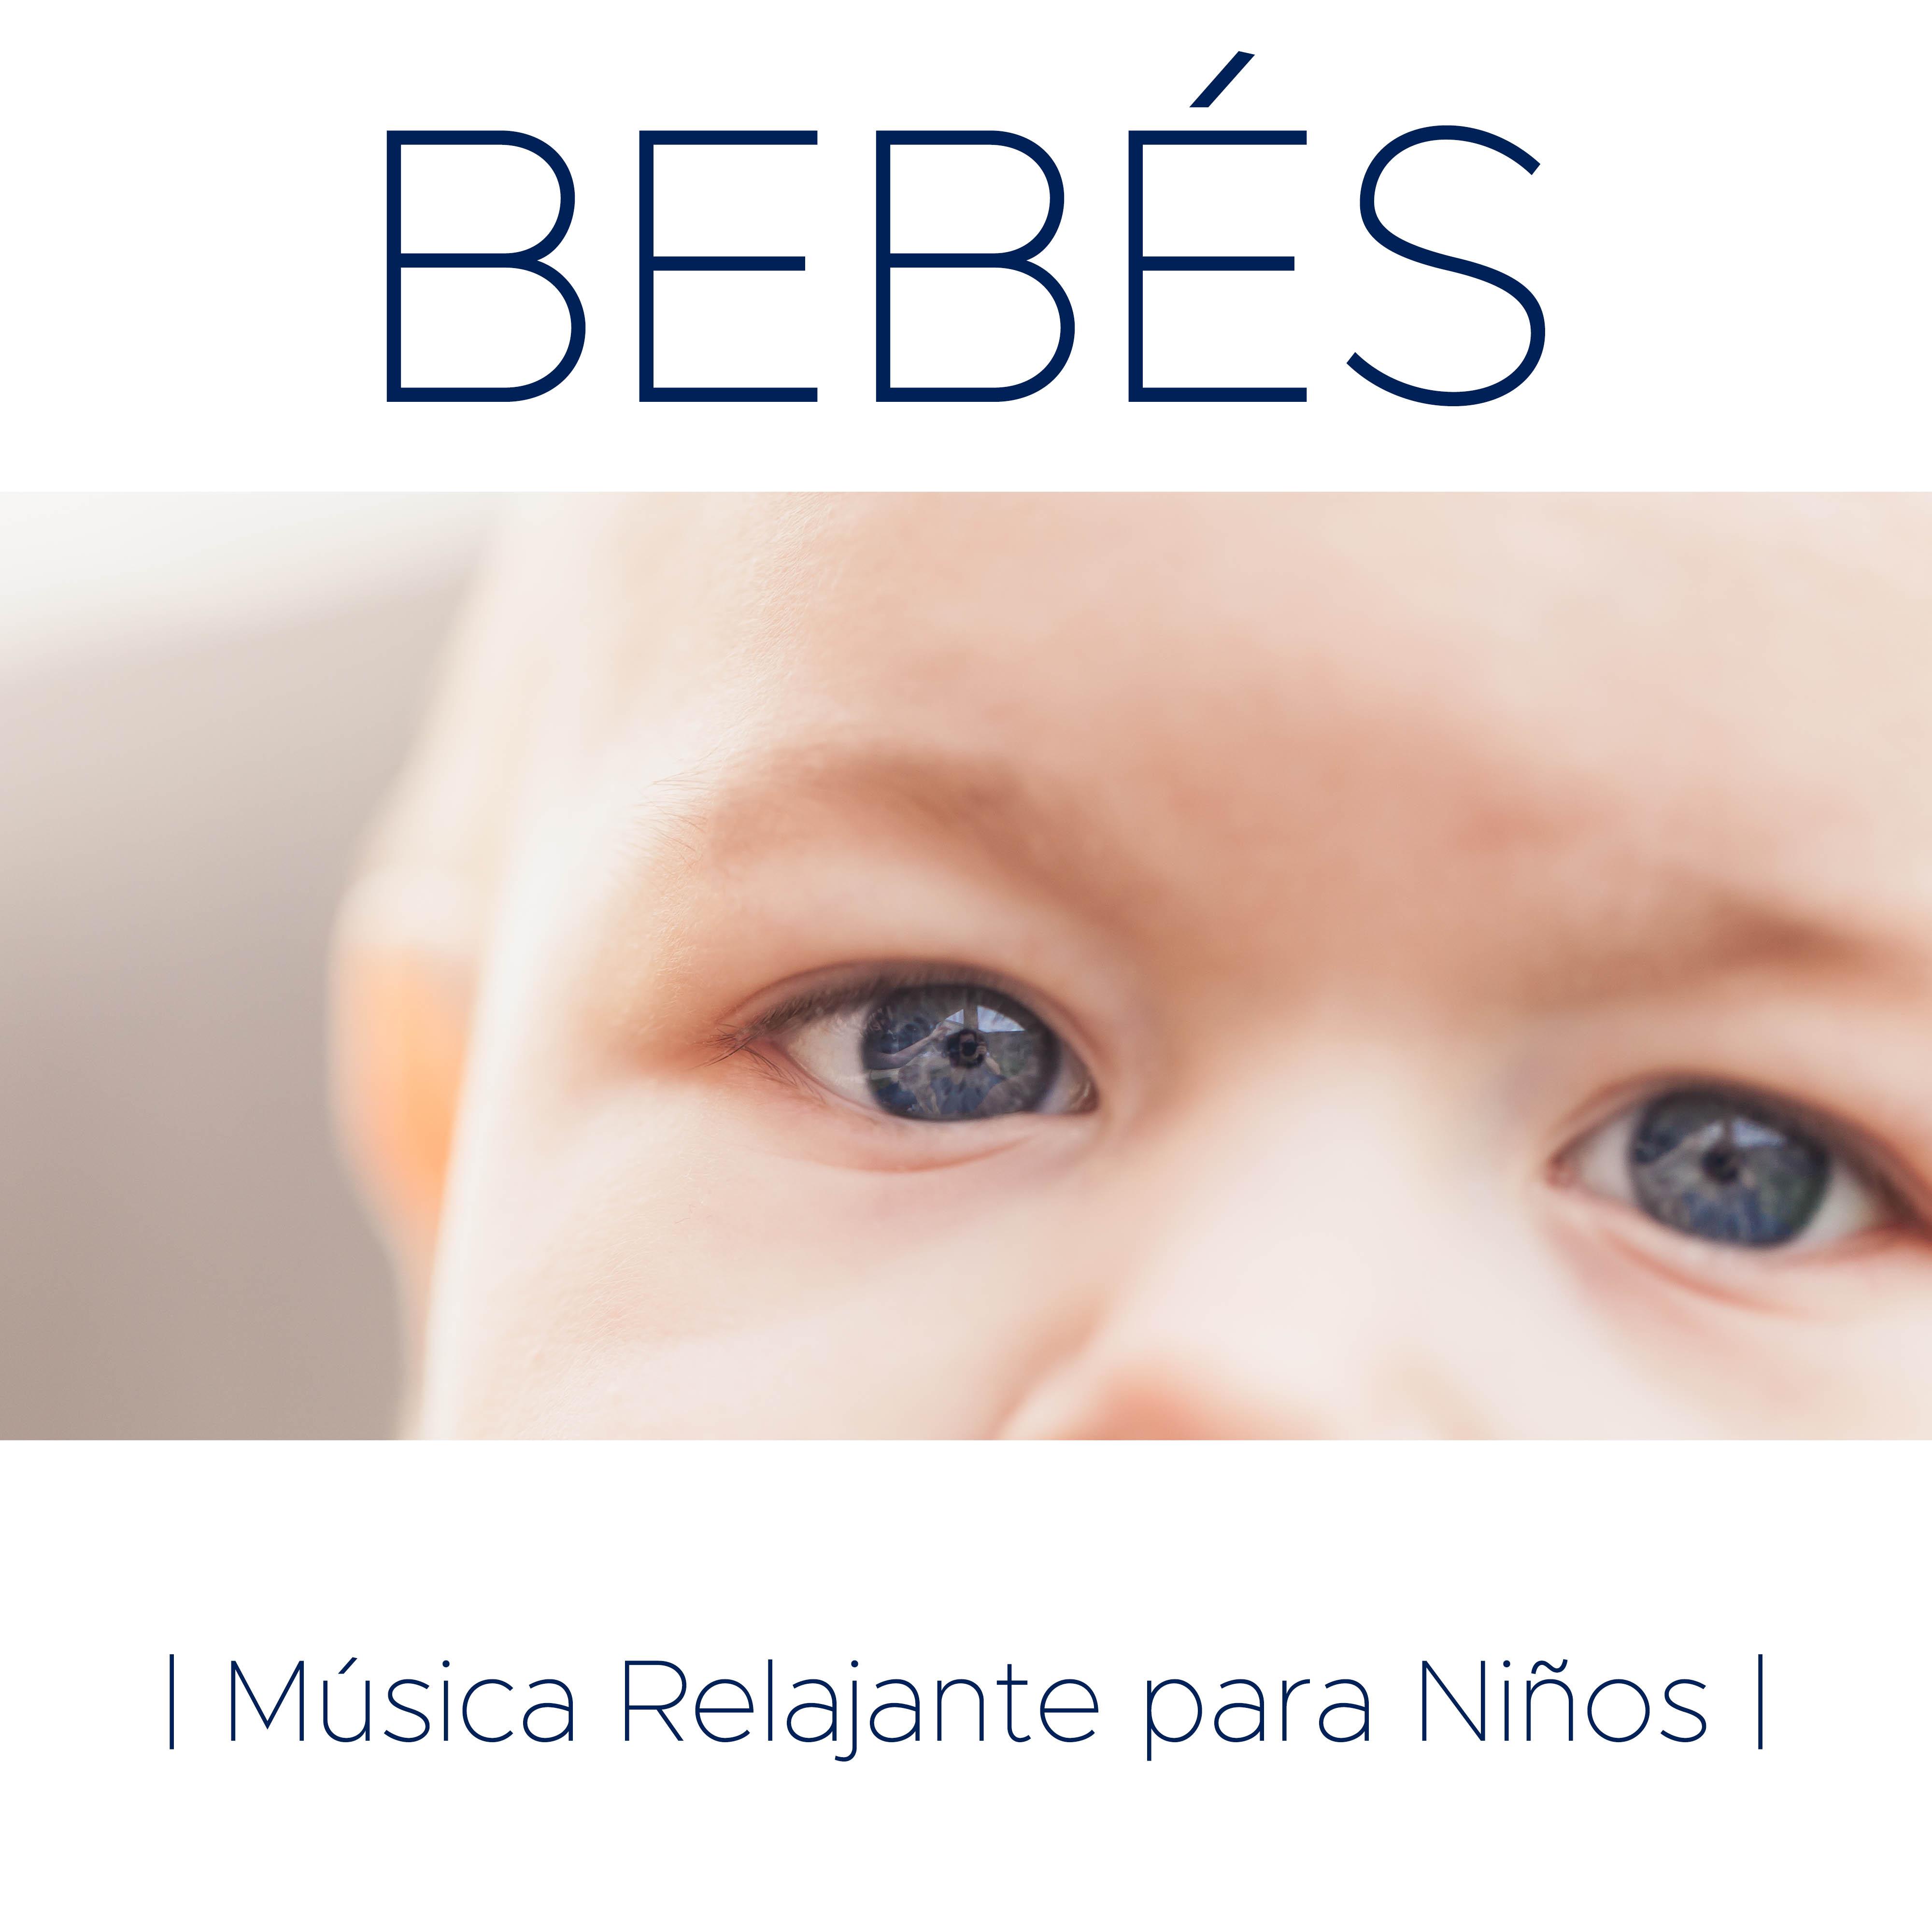 Bebe s: Musica Relajante para Ni os